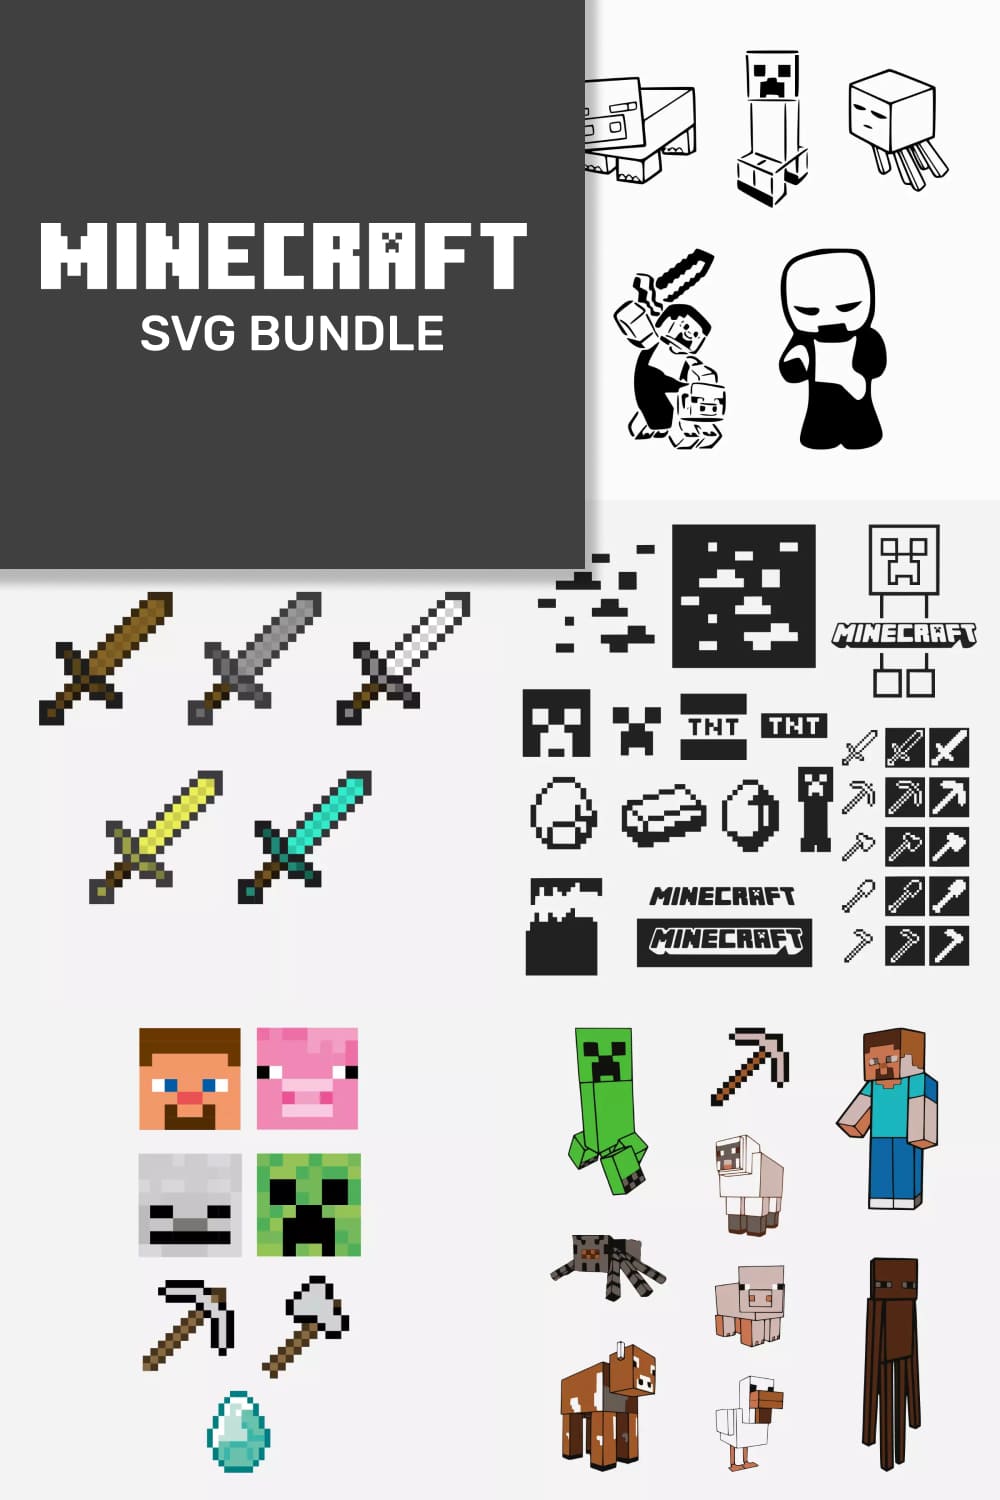 Minecraft SVG bundle, picture for pinterest 1000x1500.